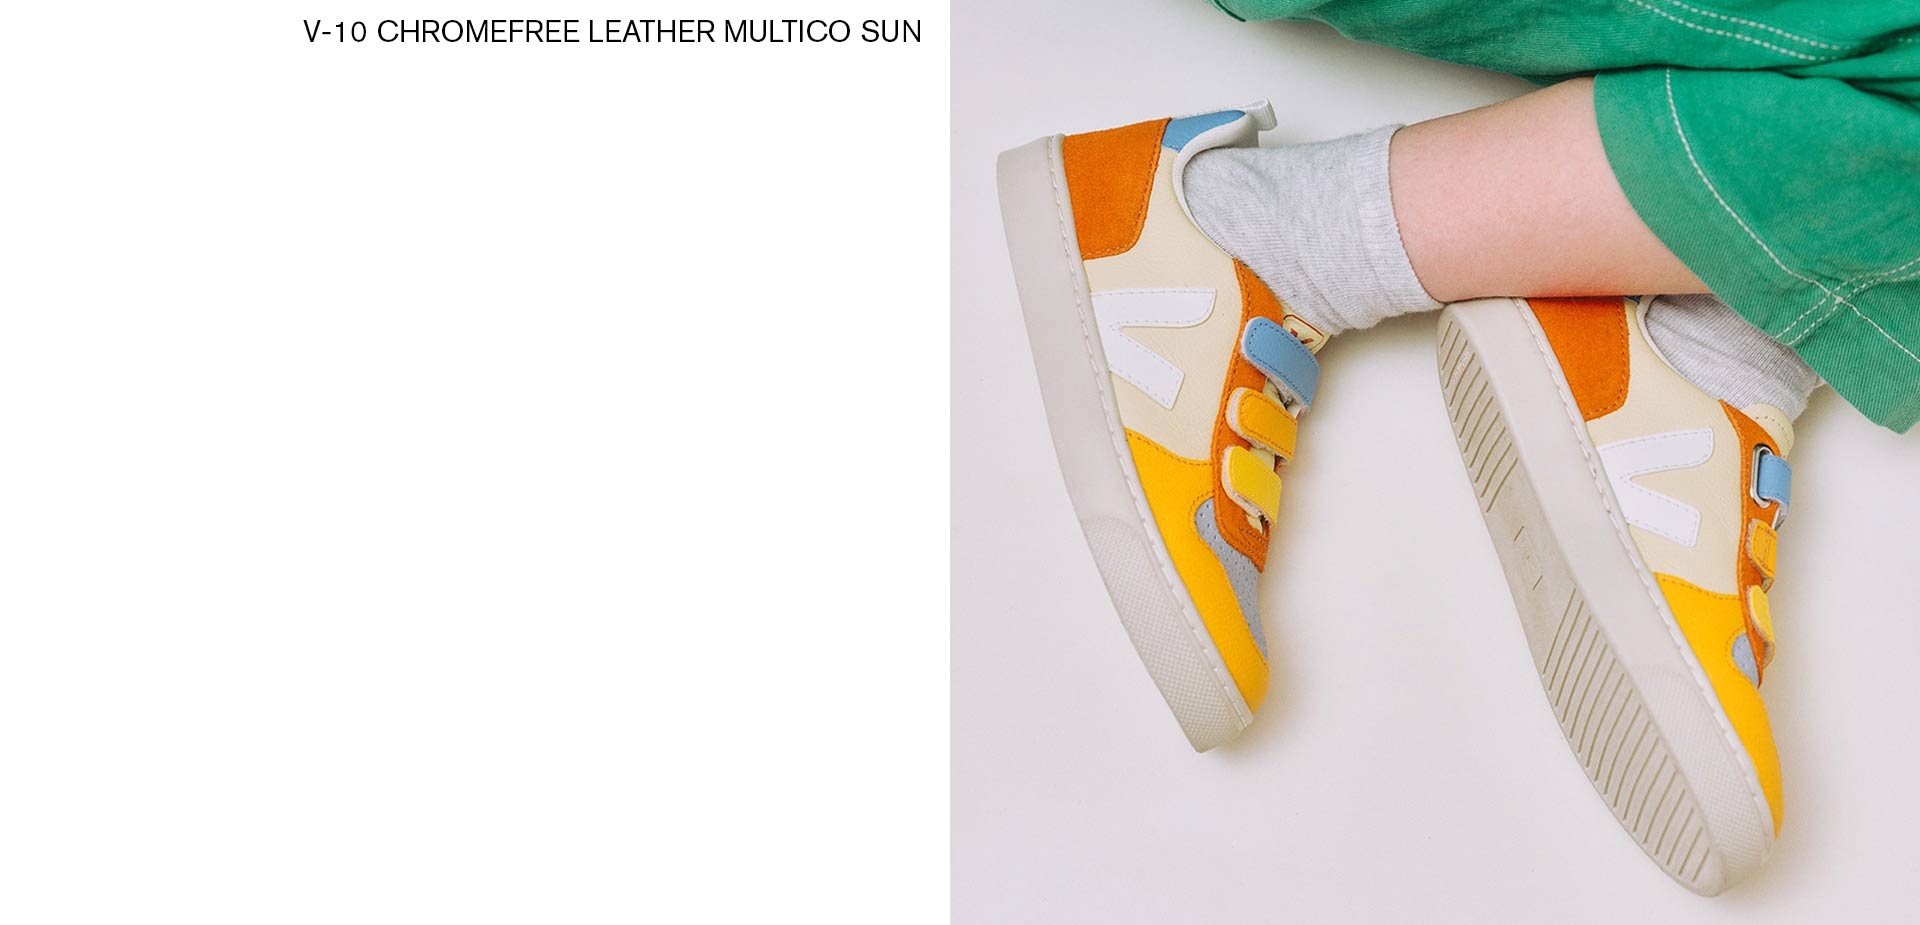 V-10 chromefree leather multico sun shoes